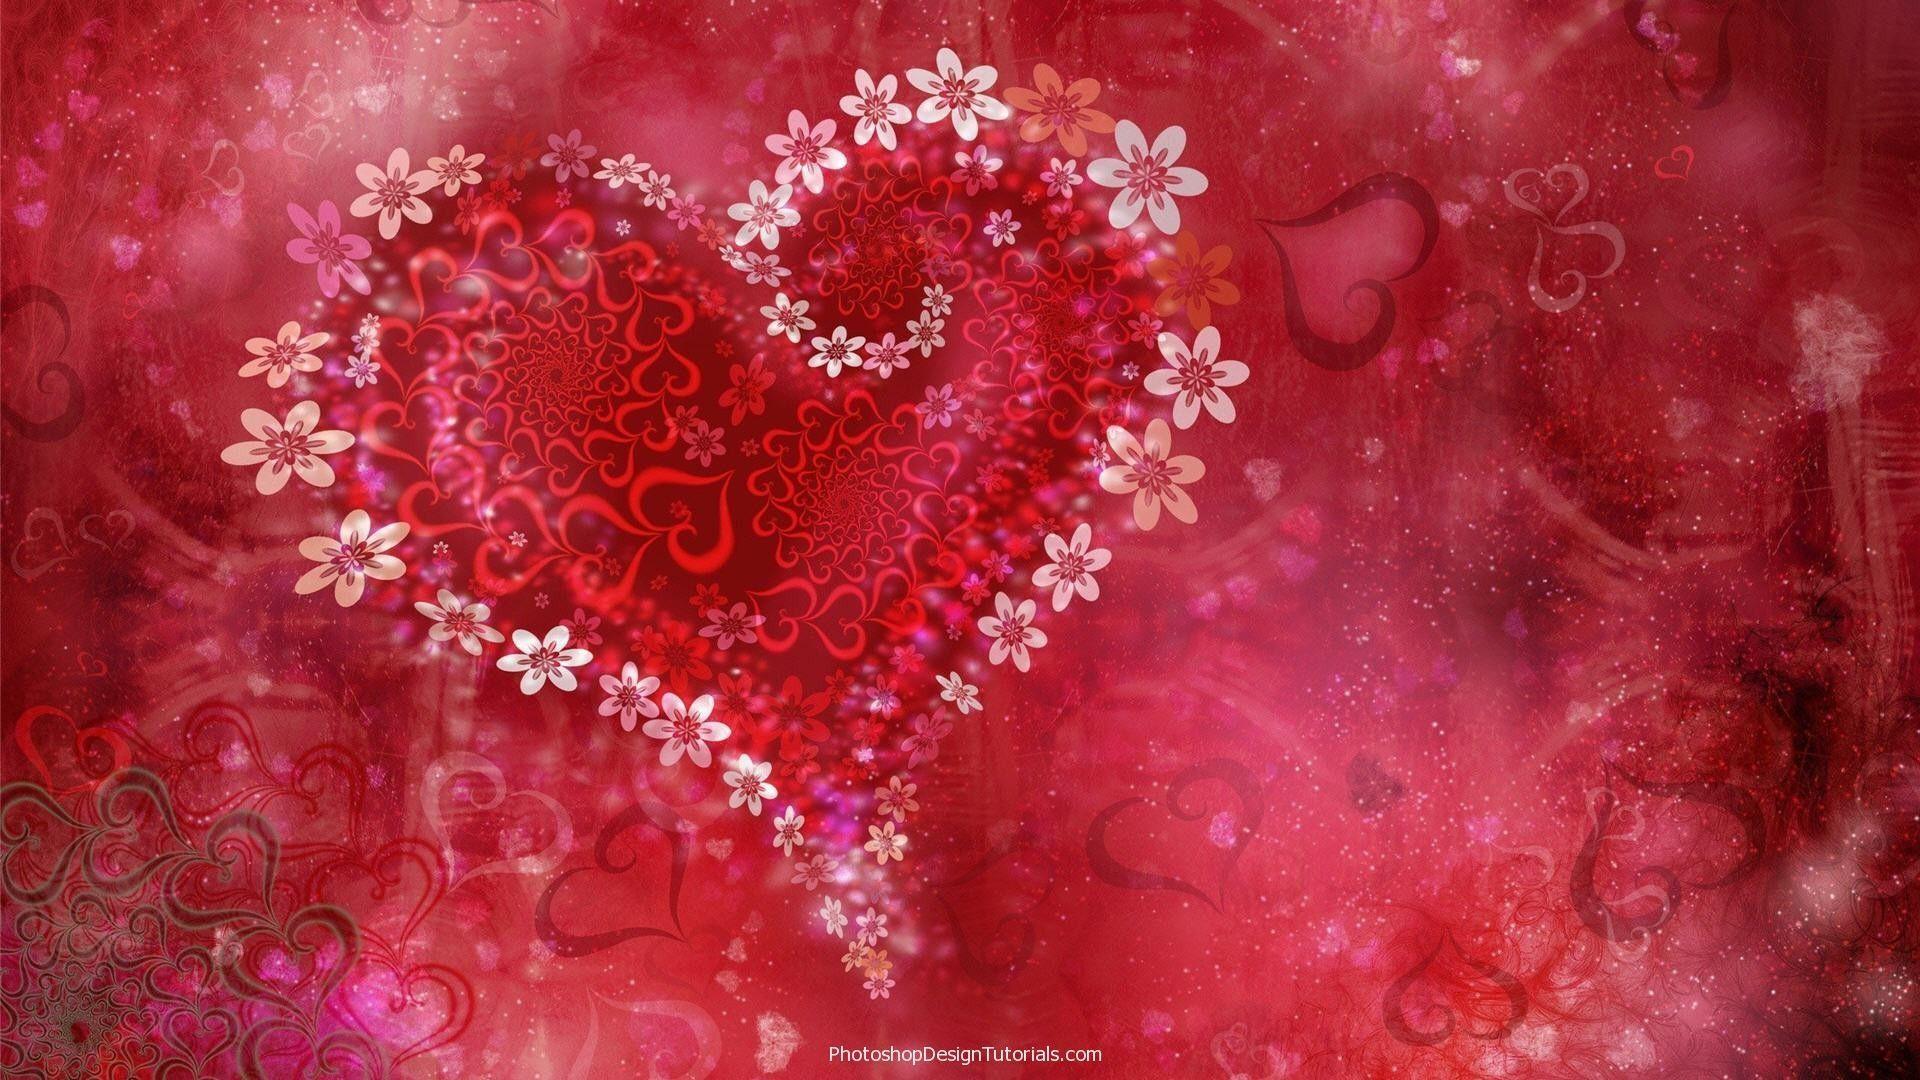 Happy Valentines day wallpaper 2014 download free